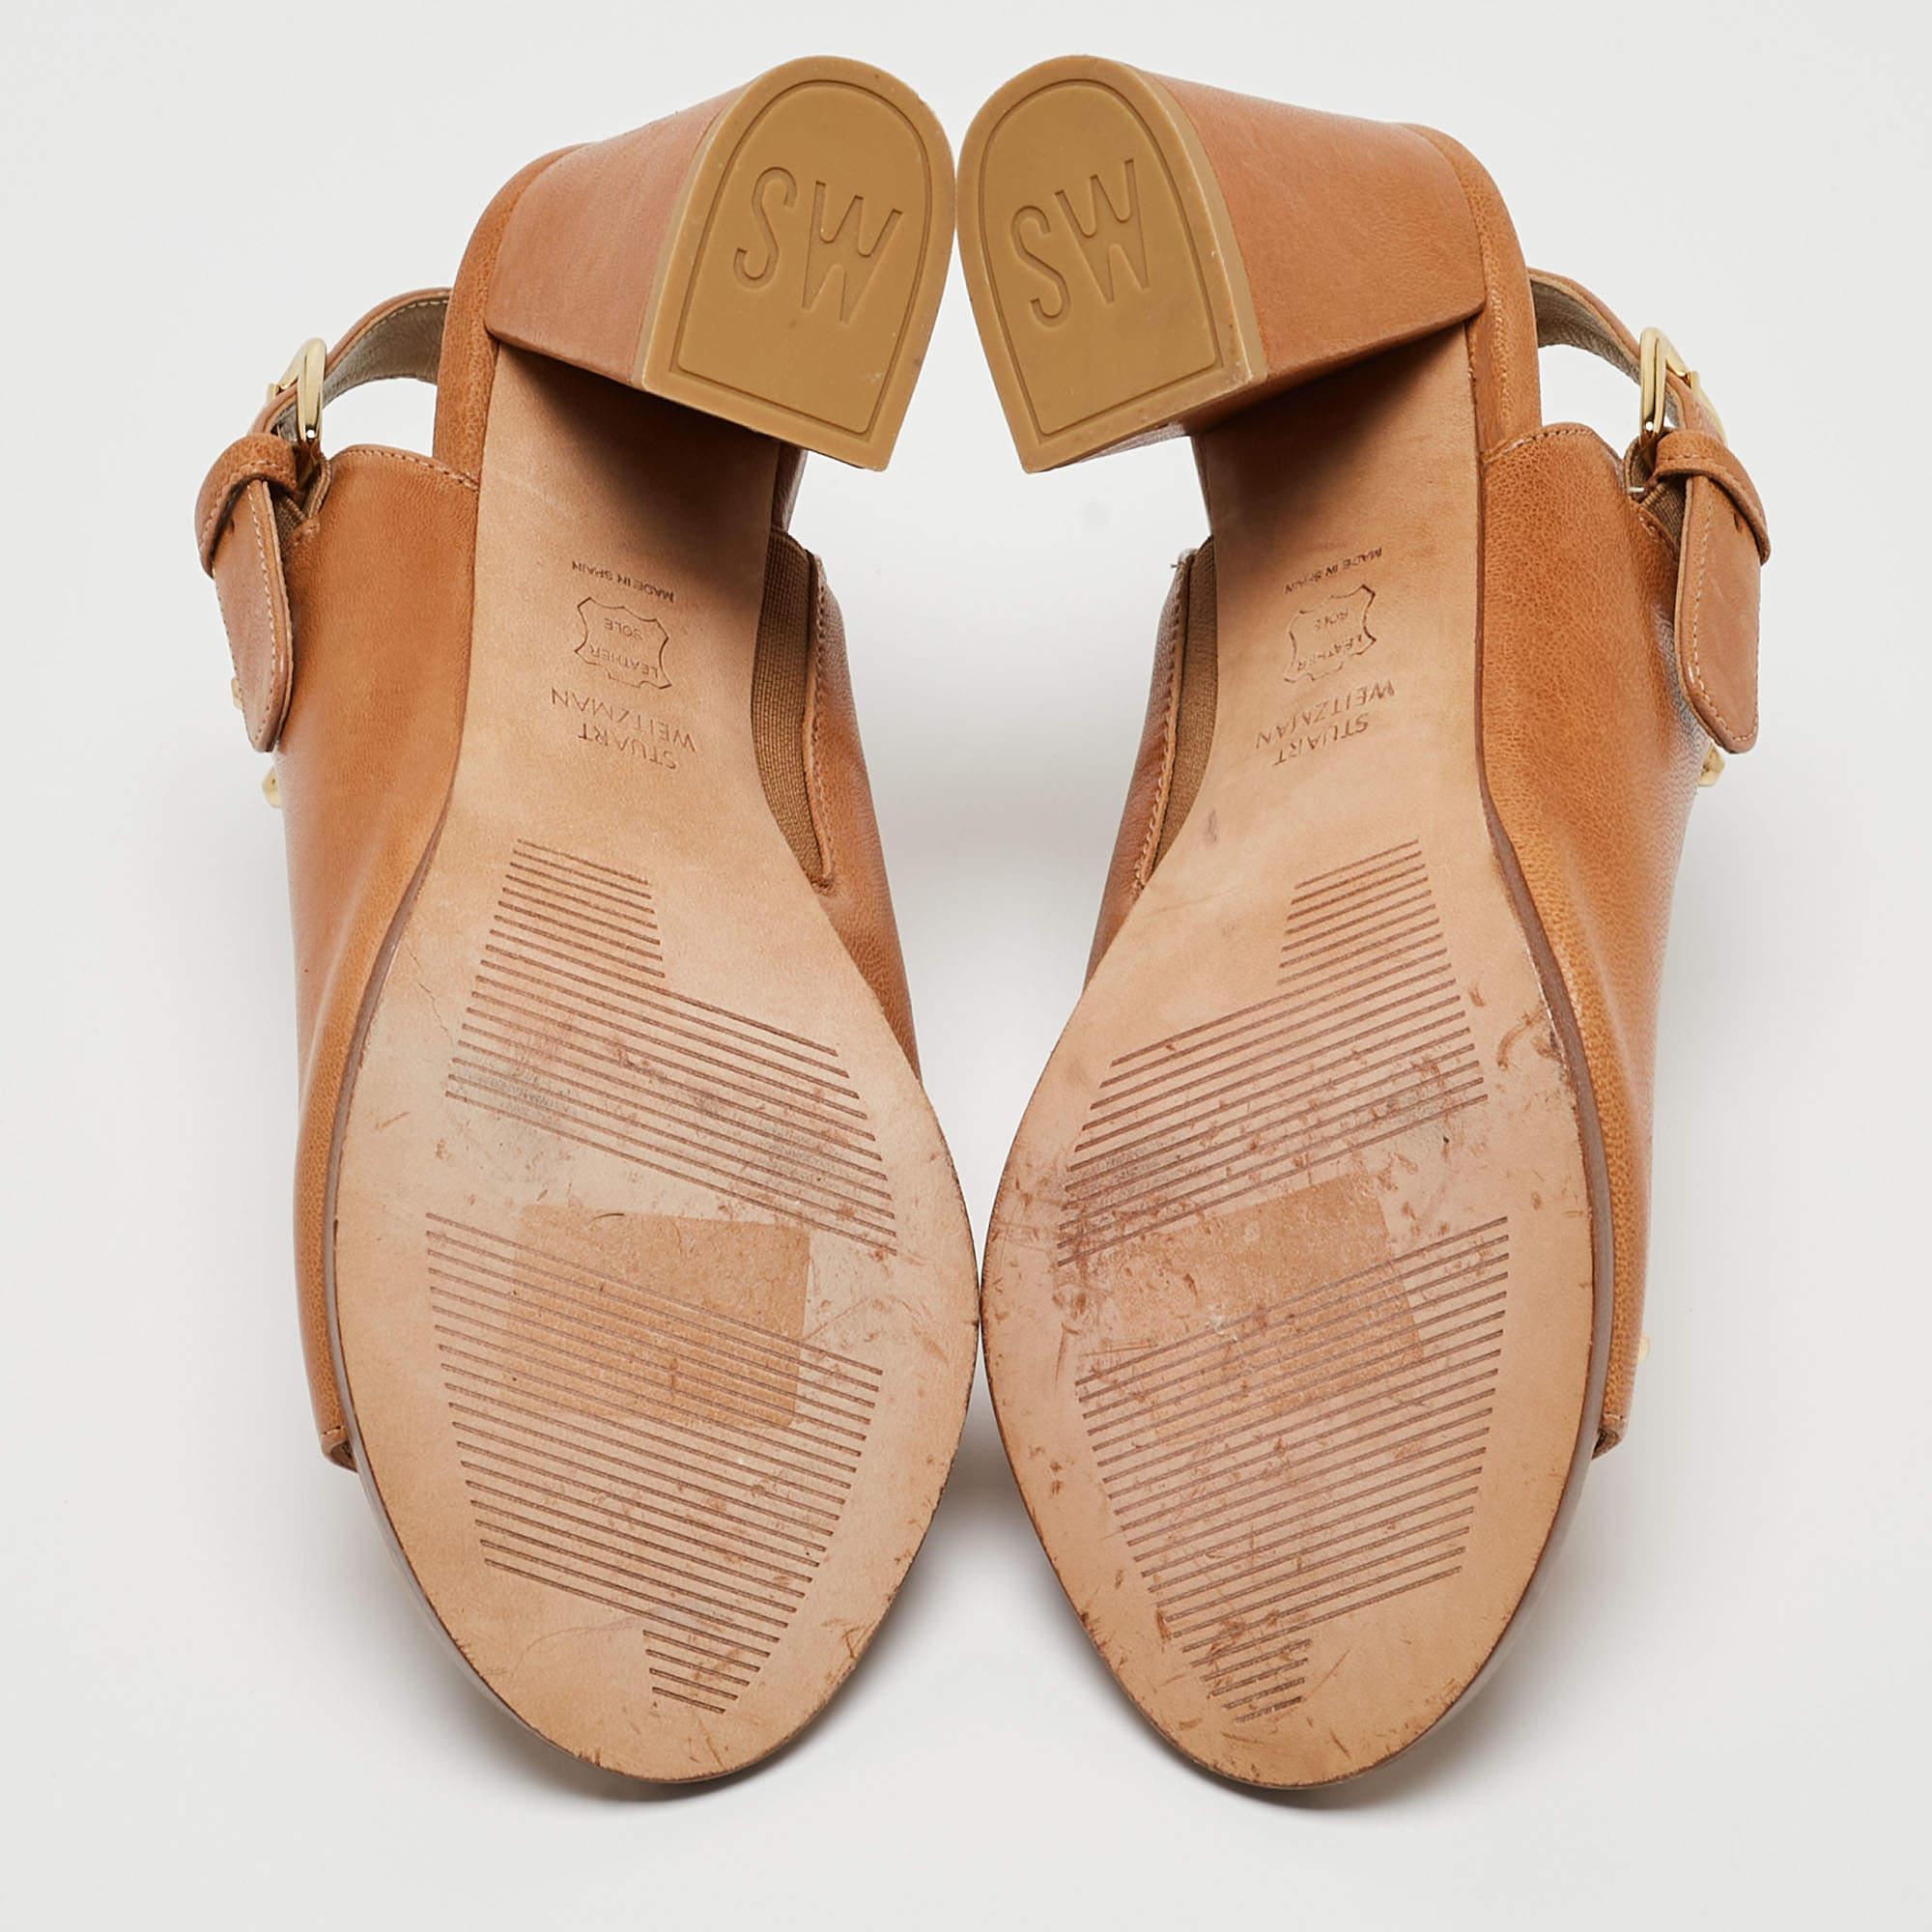 Stuart Weitzman Tan Leather Studded Slingback Sandals Size 36 3